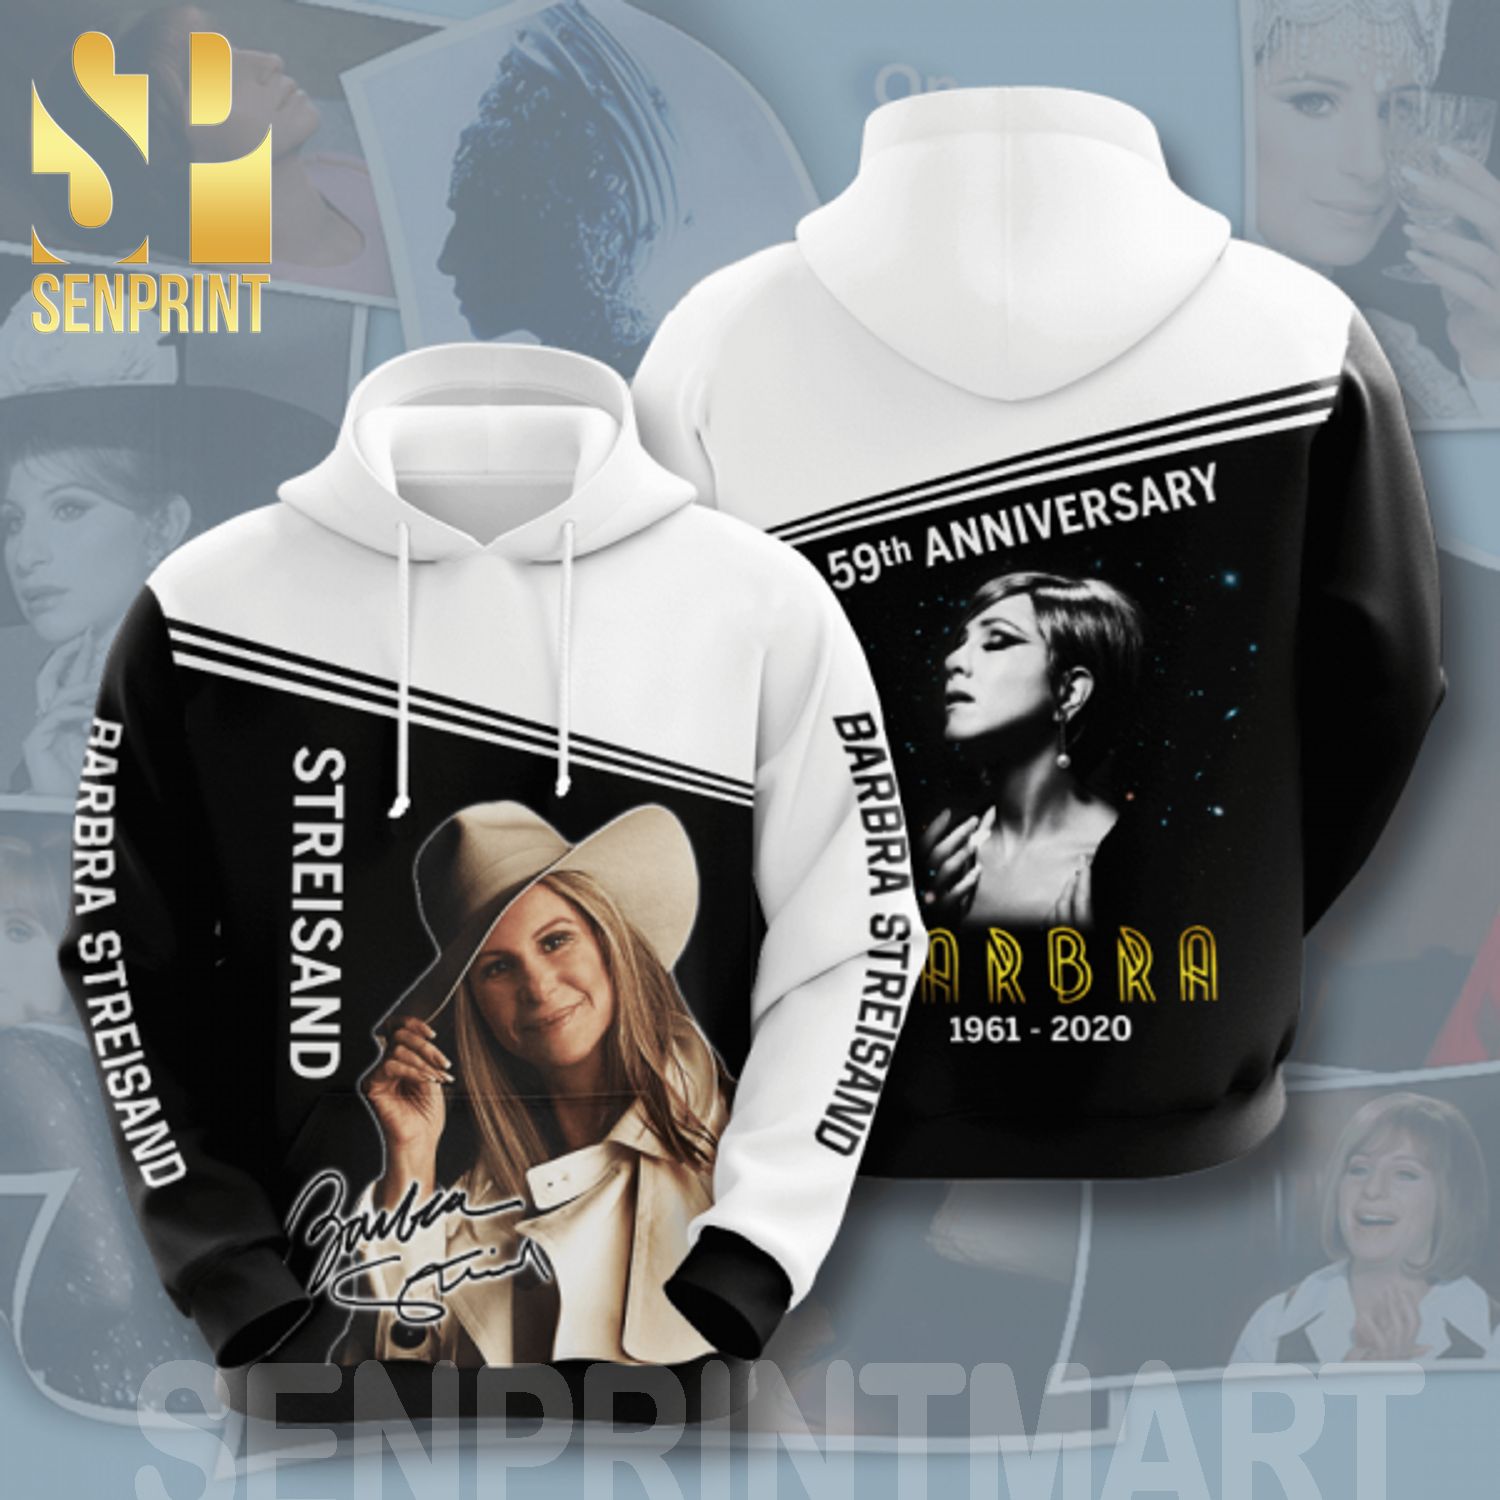 Barbra Streisand 59th Anniversary 3D All Over Print Shirt